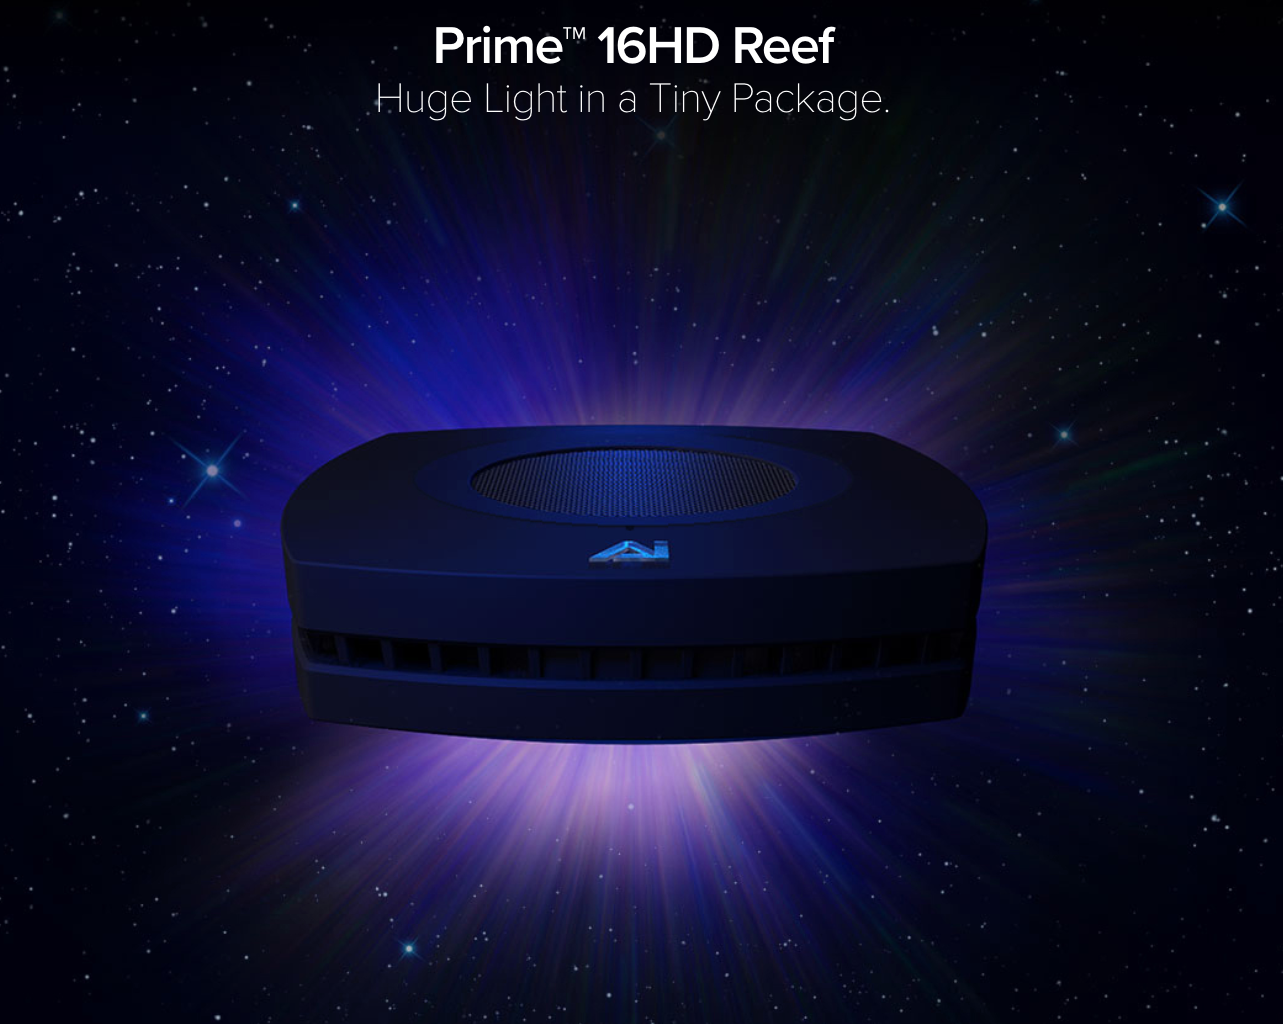 Detail photo for Aqua Illumination AI Prime 16 HD Smart Reef LED Light - Black Body